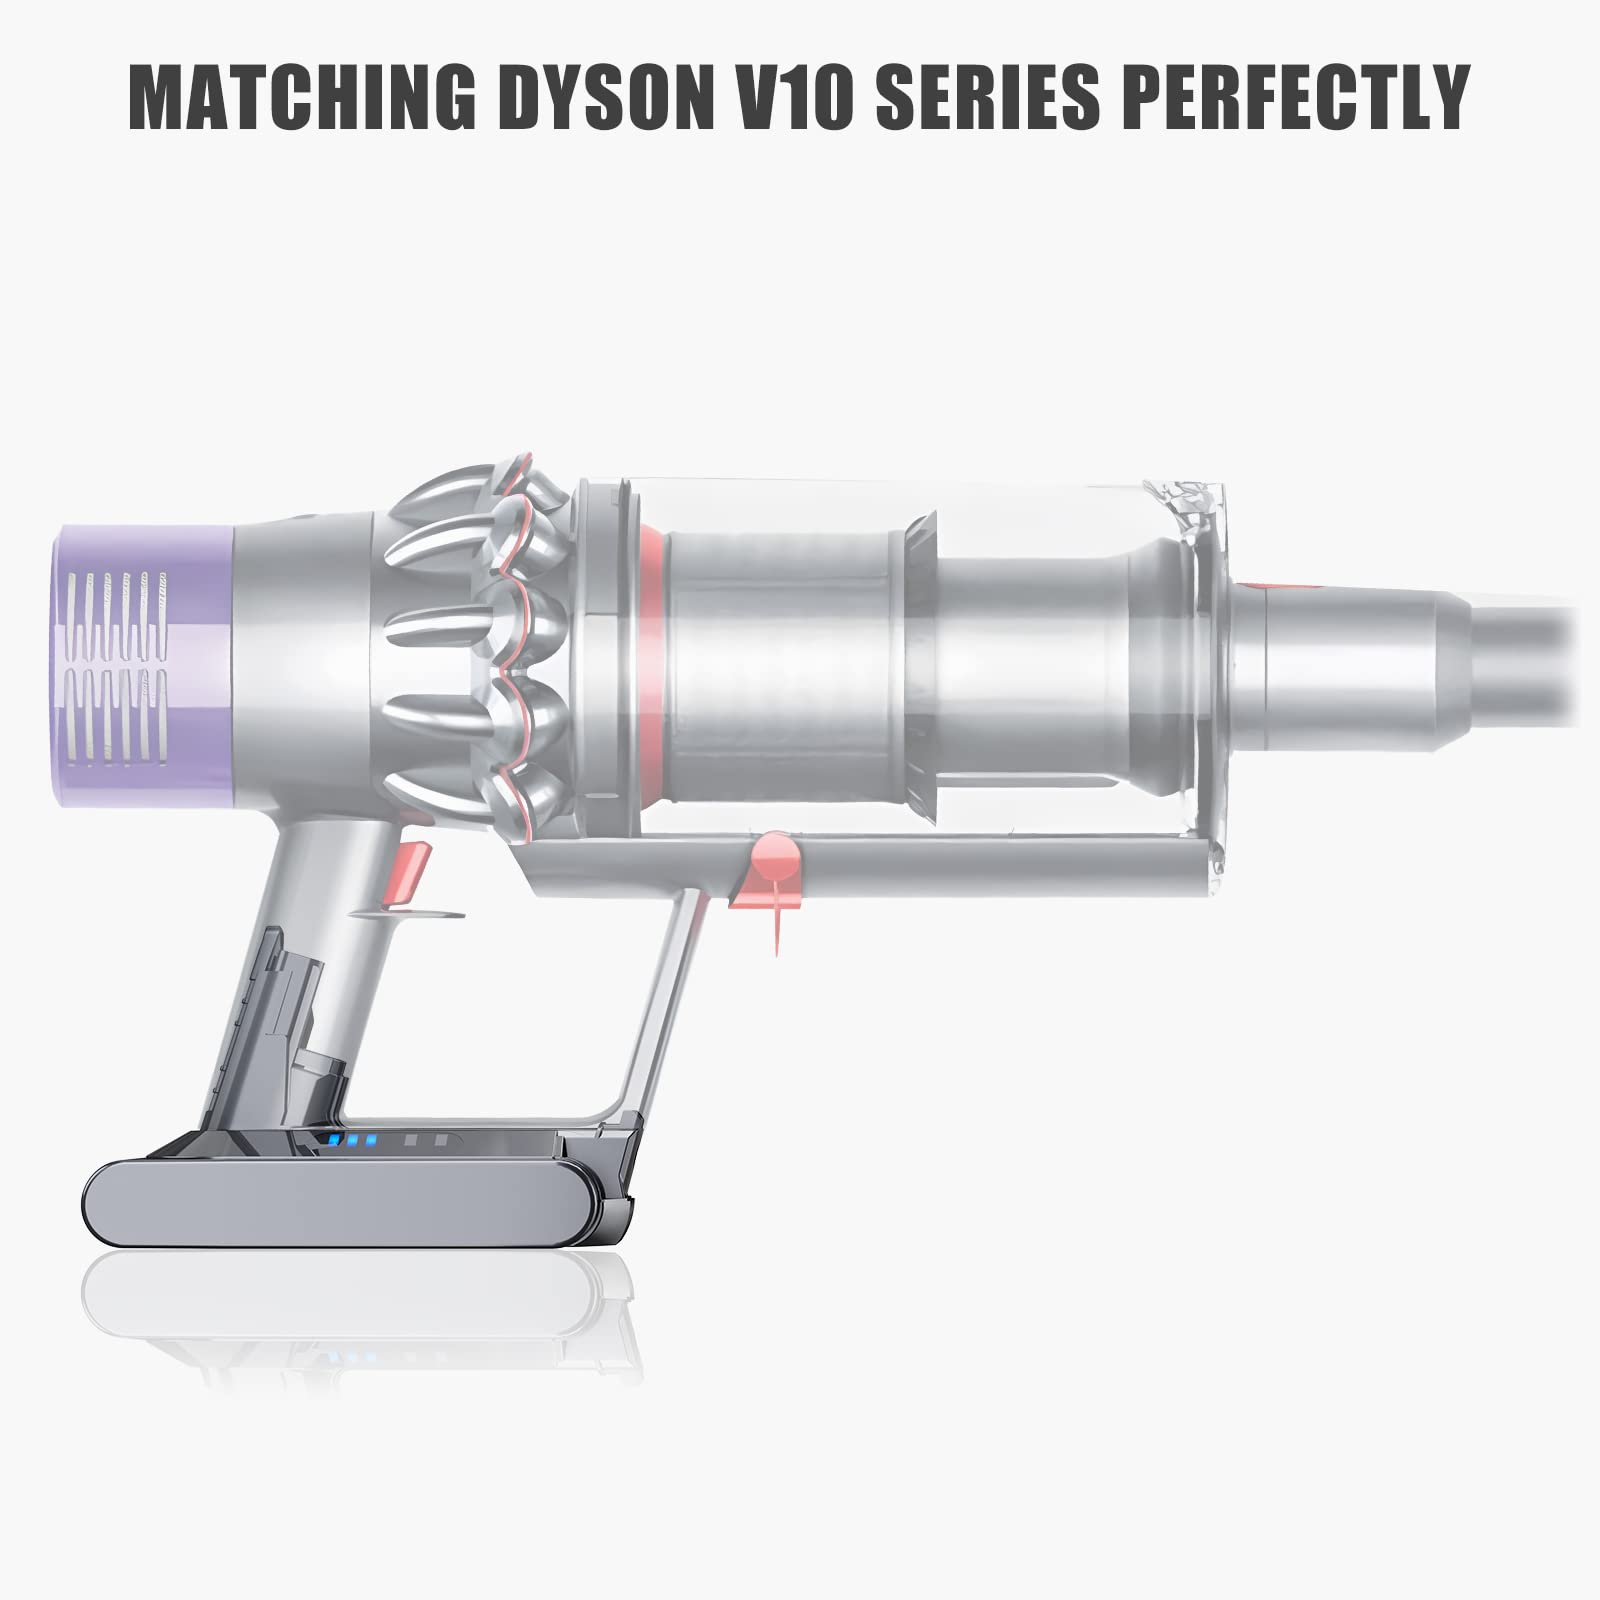 Evary 25.2V V10 Battery for Dyson V10 Battery Replacement 5000mAh, Compatible with Dyson V10 Animal V10 Absolute V10 Fluffy V10 Motorhead Cordless Stick Vacuum Cleaner